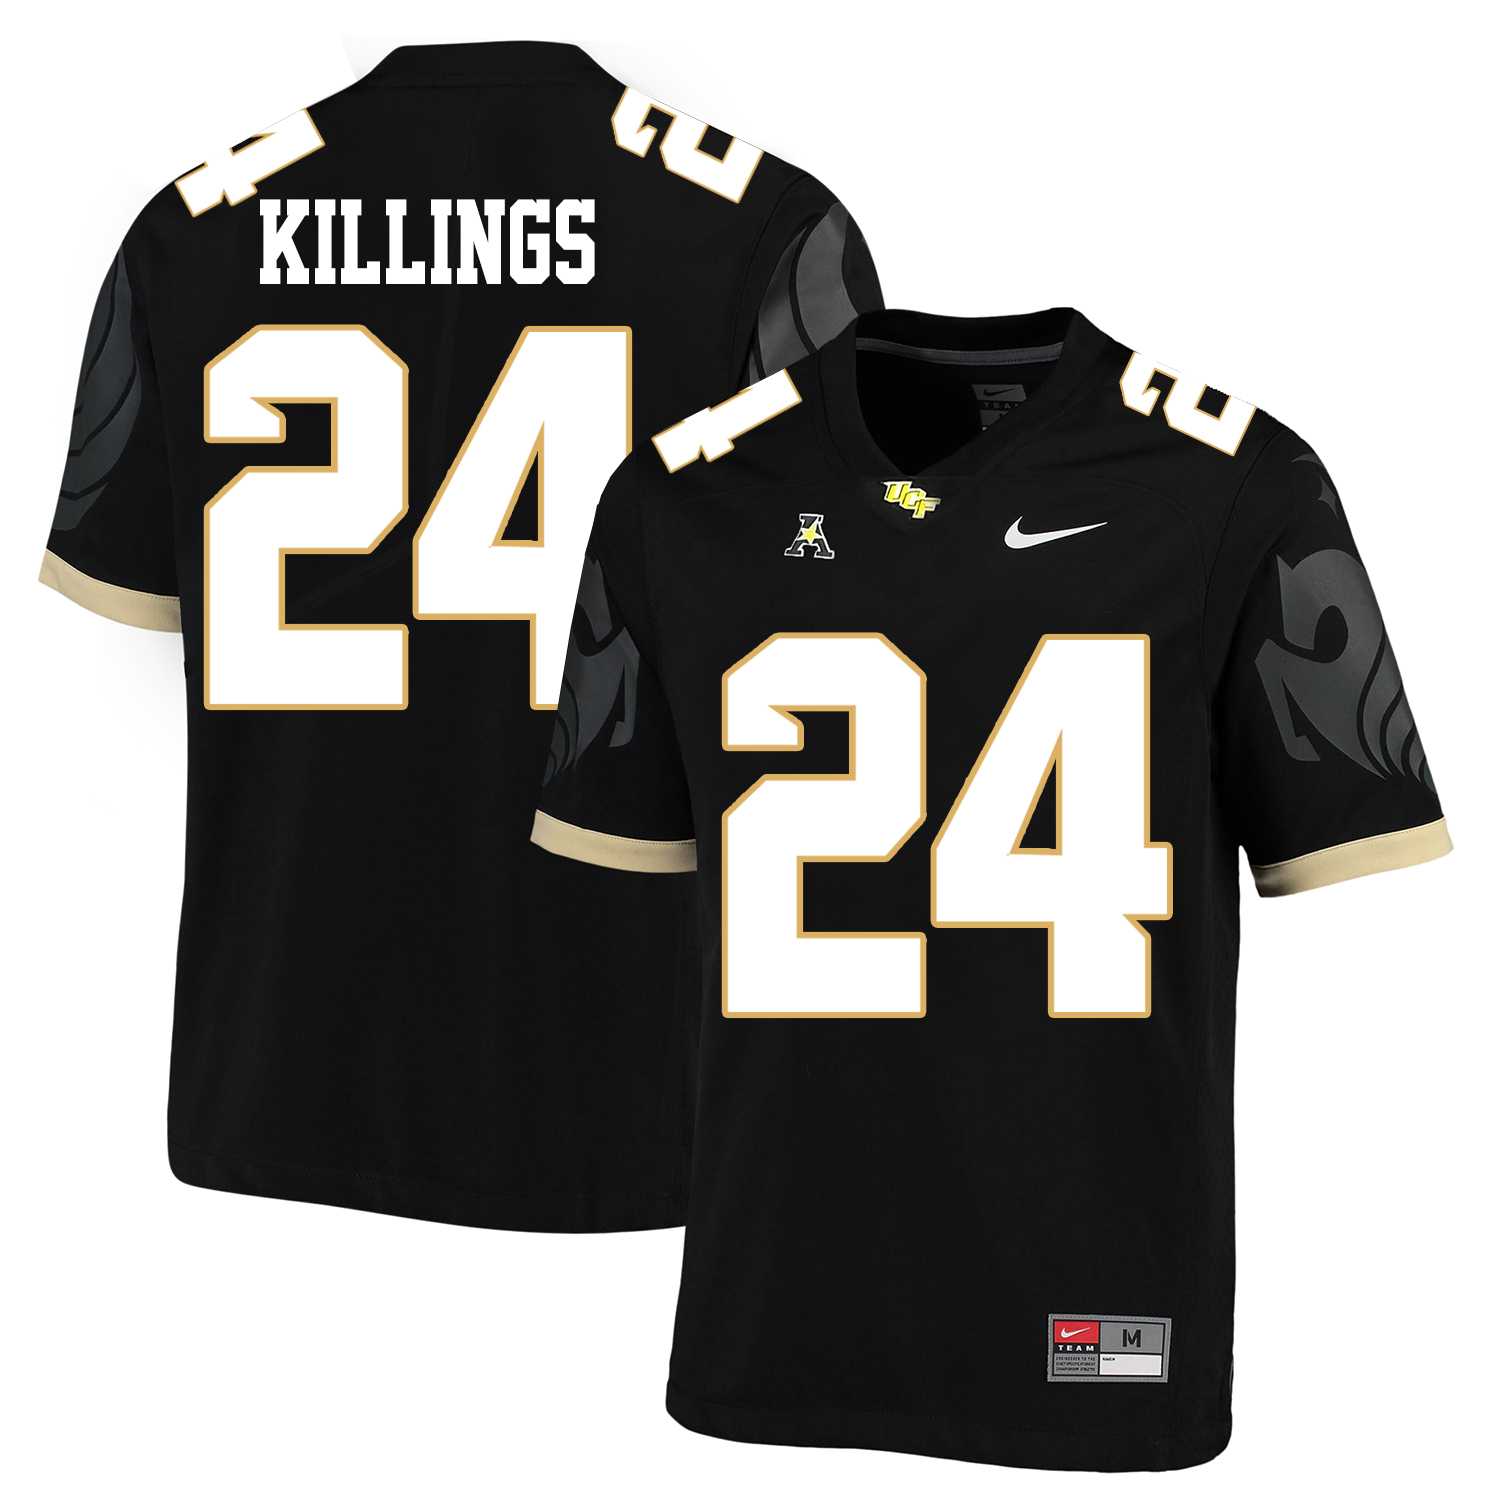 UCF Knights #24 D.J. Killings Black College Football Jersey